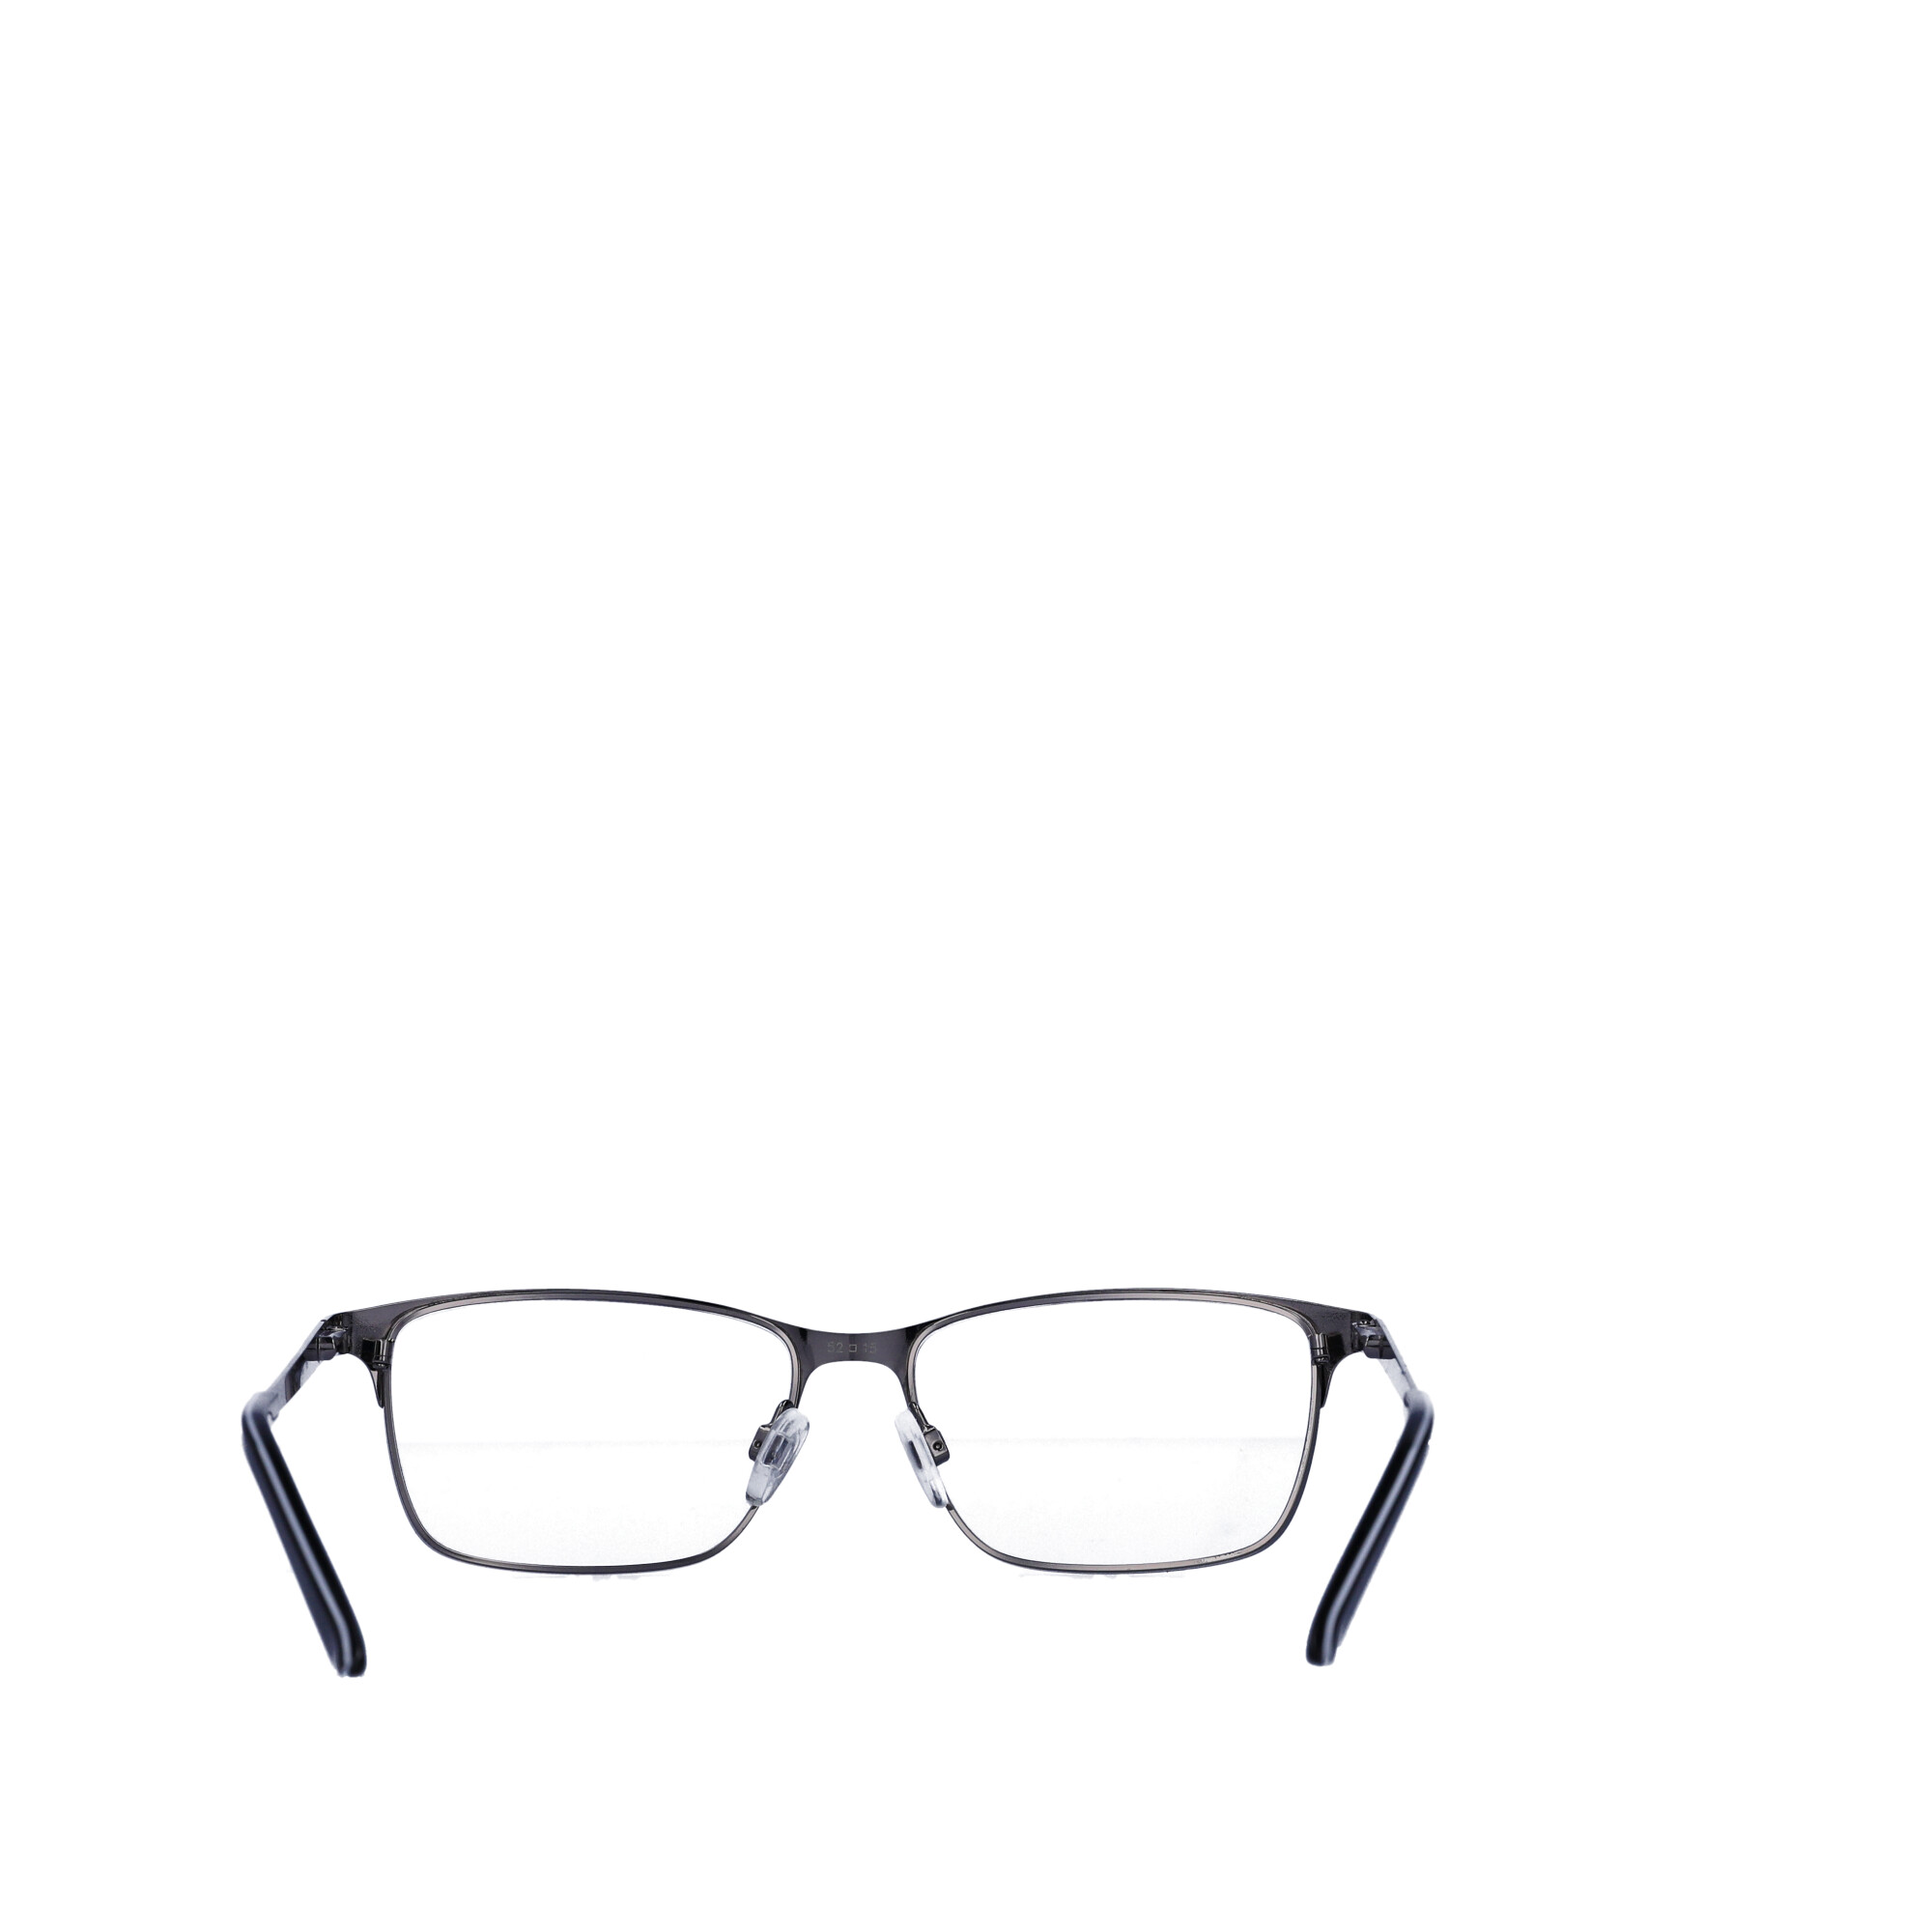 Walmart Men's Rx'able Eyeglasses, Mop51, Black, 52-15-140 - image 3 of 13